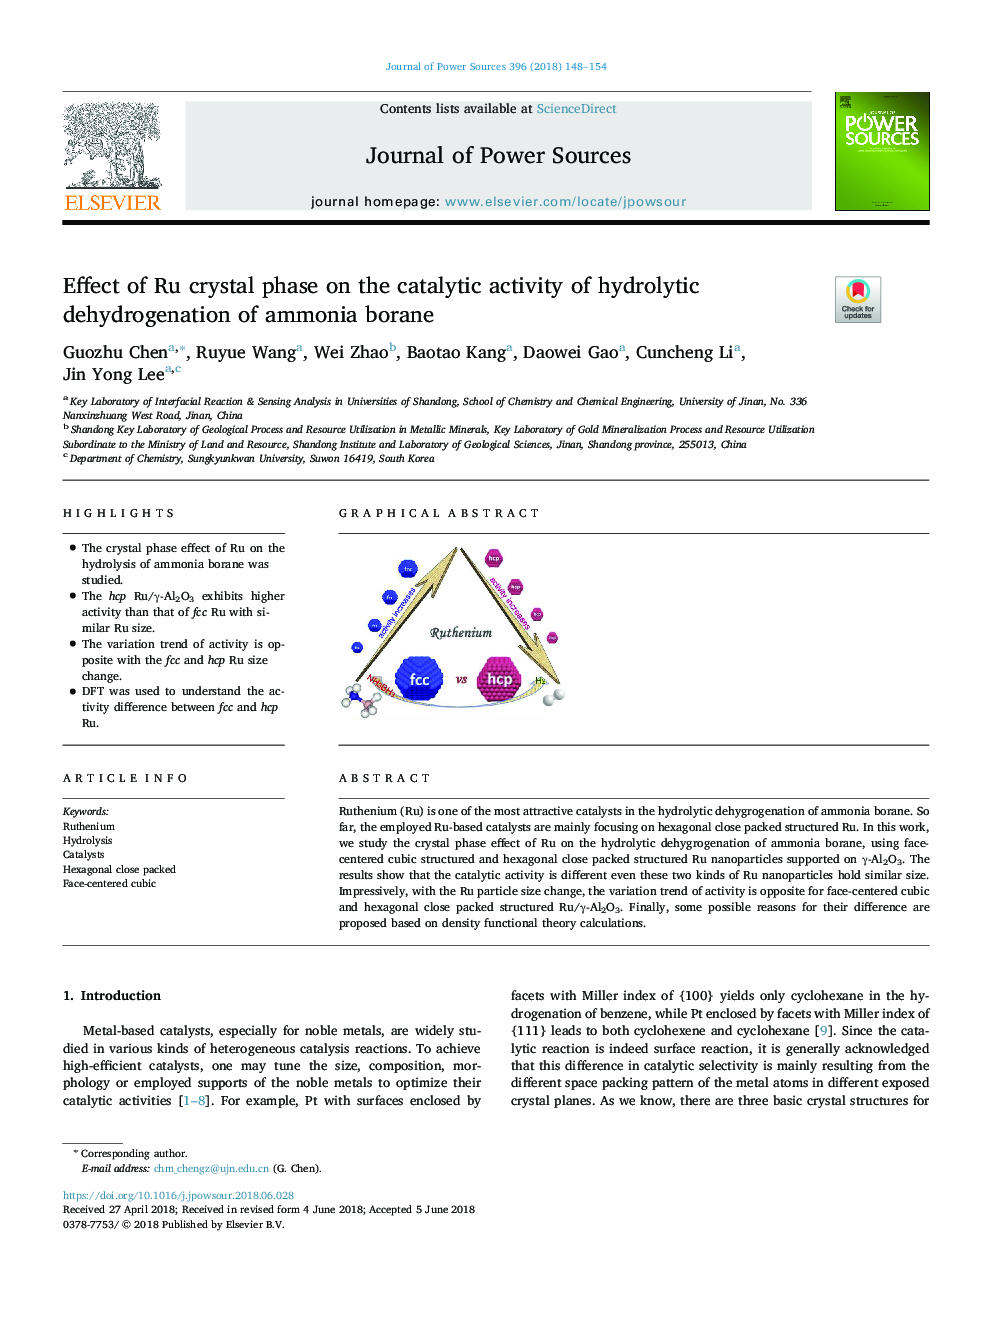 Effect of Ru crystal phase on the catalytic activity of hydrolytic dehydrogenation of ammonia borane